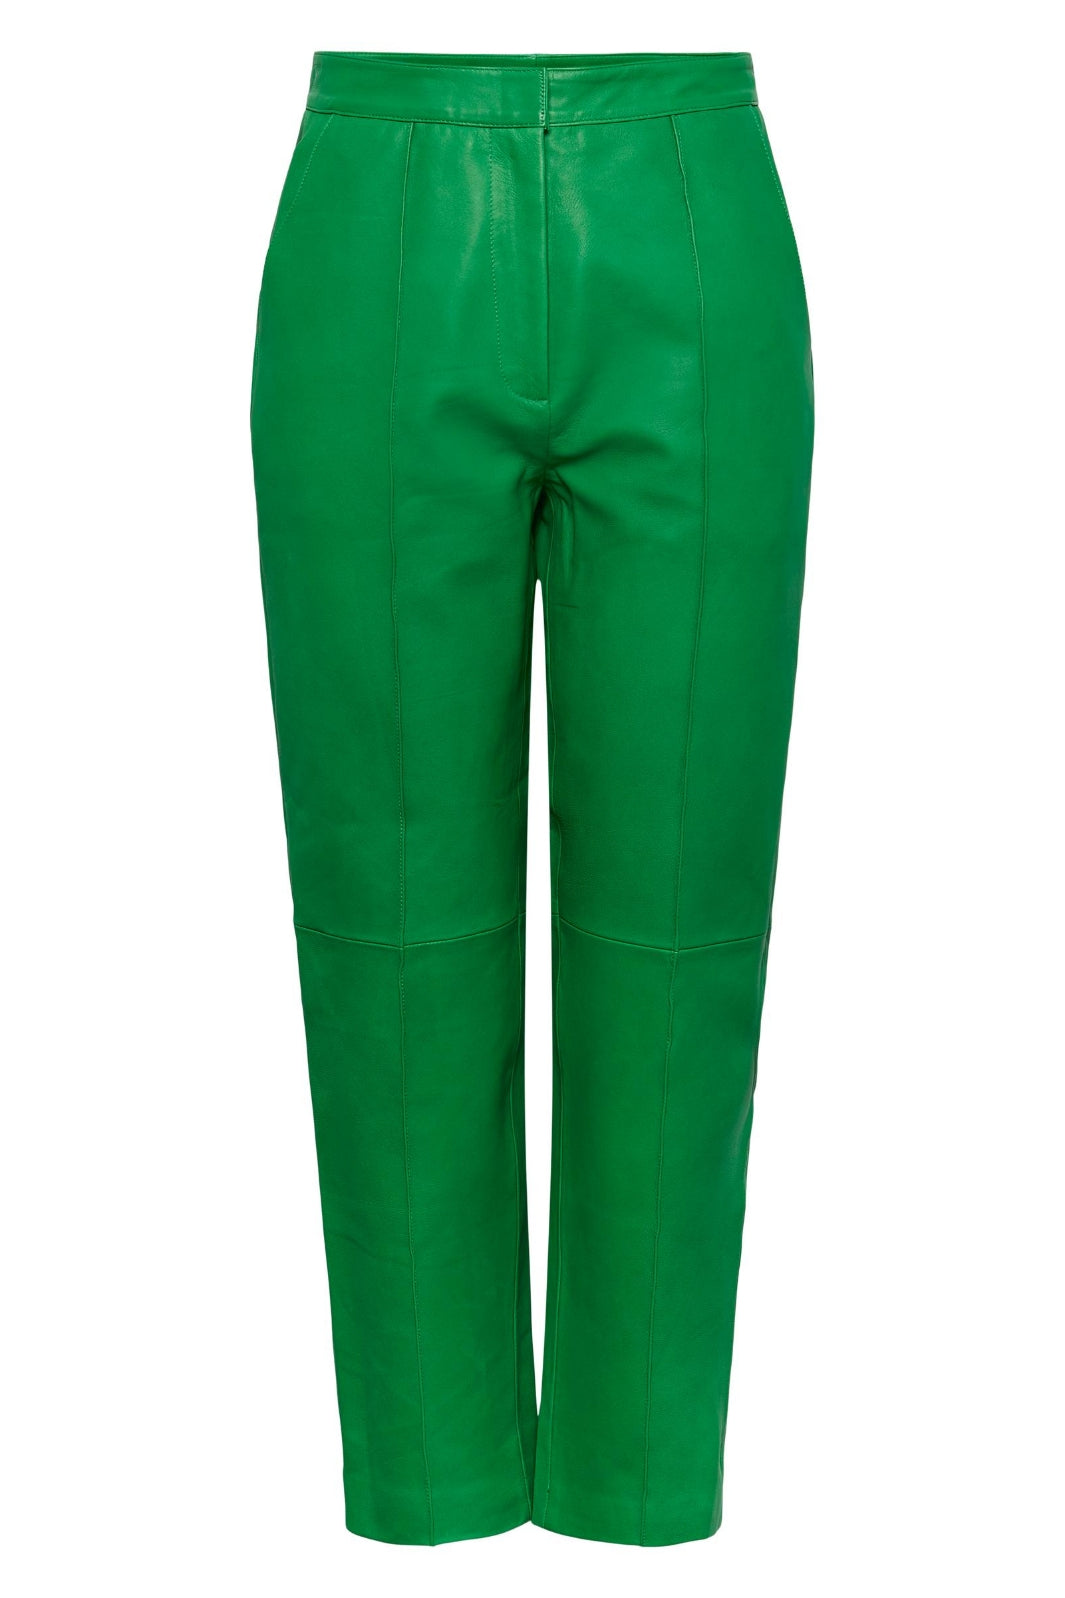 Y.A.S - Yaslisava Hw Ankle Leather Pant - Fern Green Bukser 